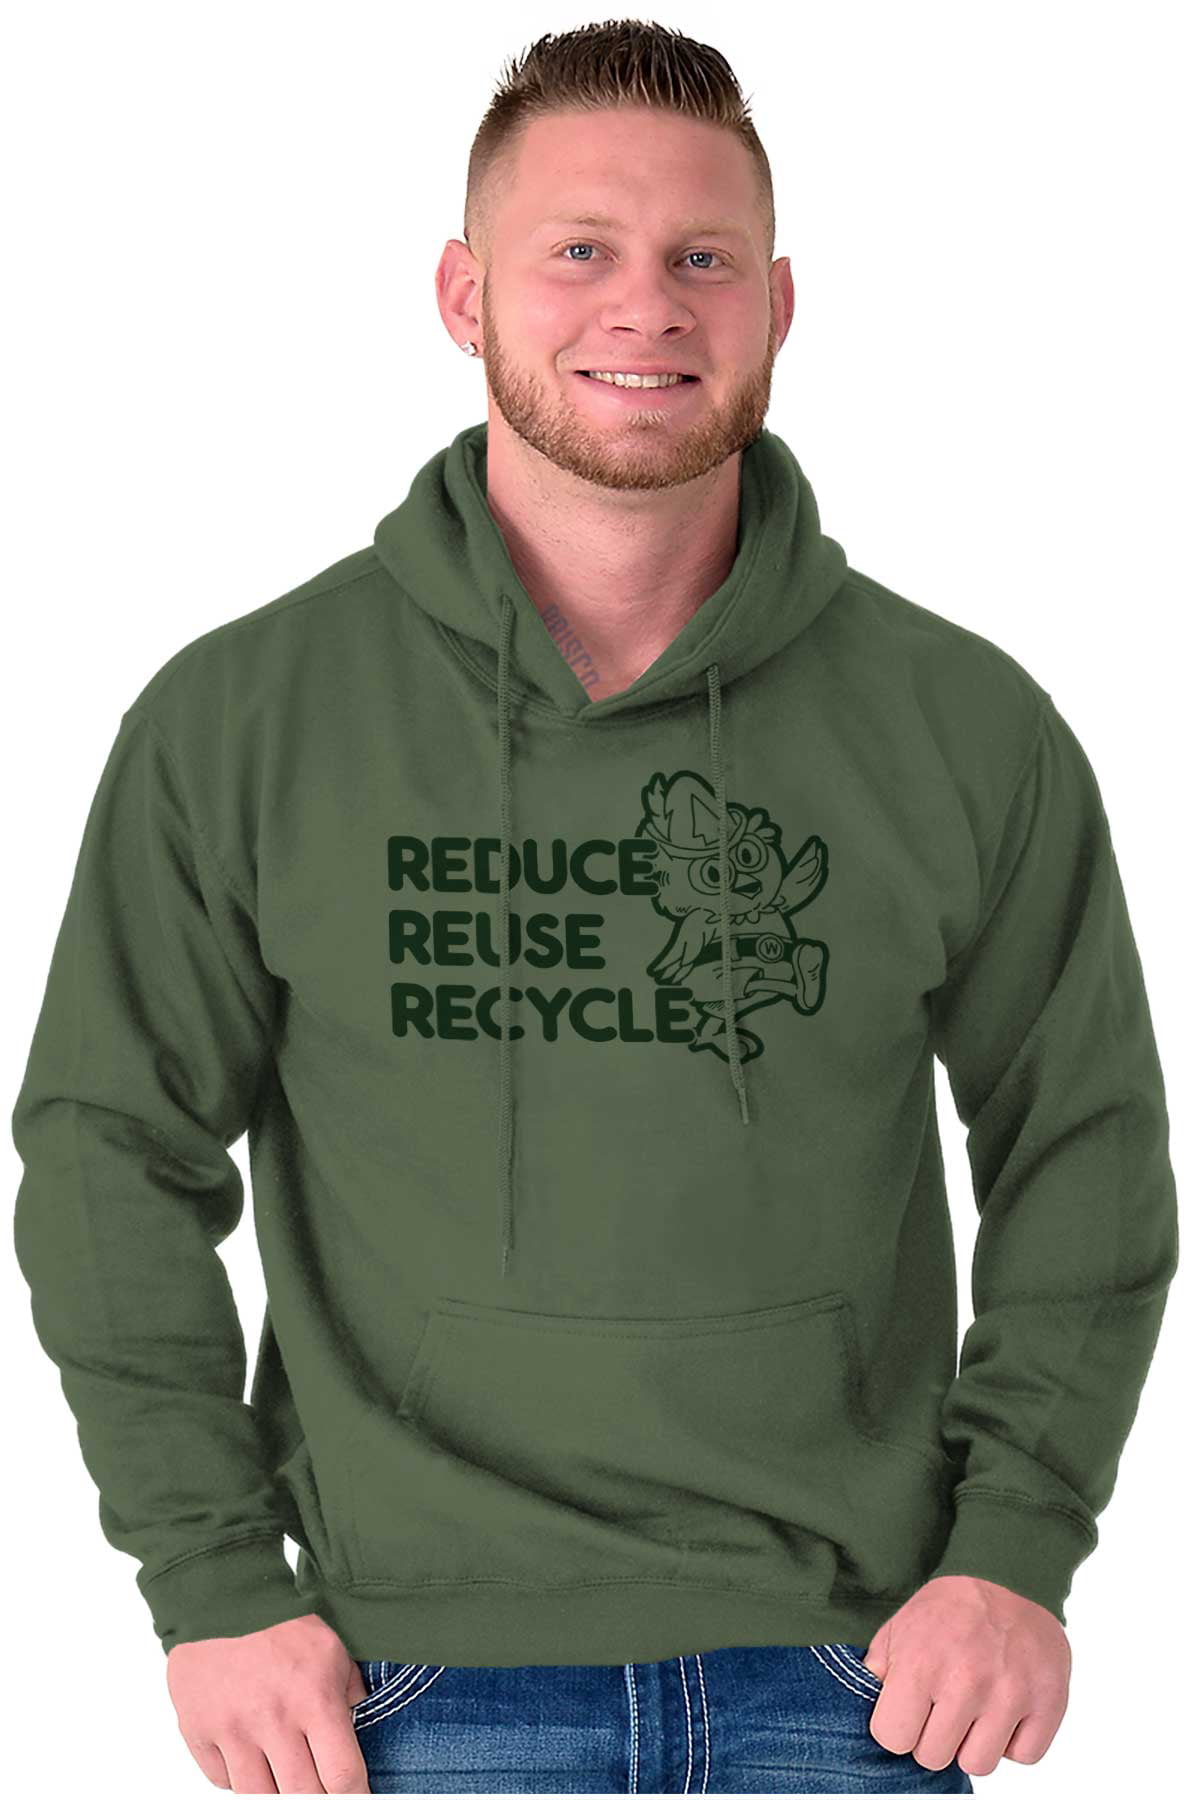 Reduce Reuse Recycle Woodsy Owl Hoodie Sweatshirt Women Men Brisco Brands X